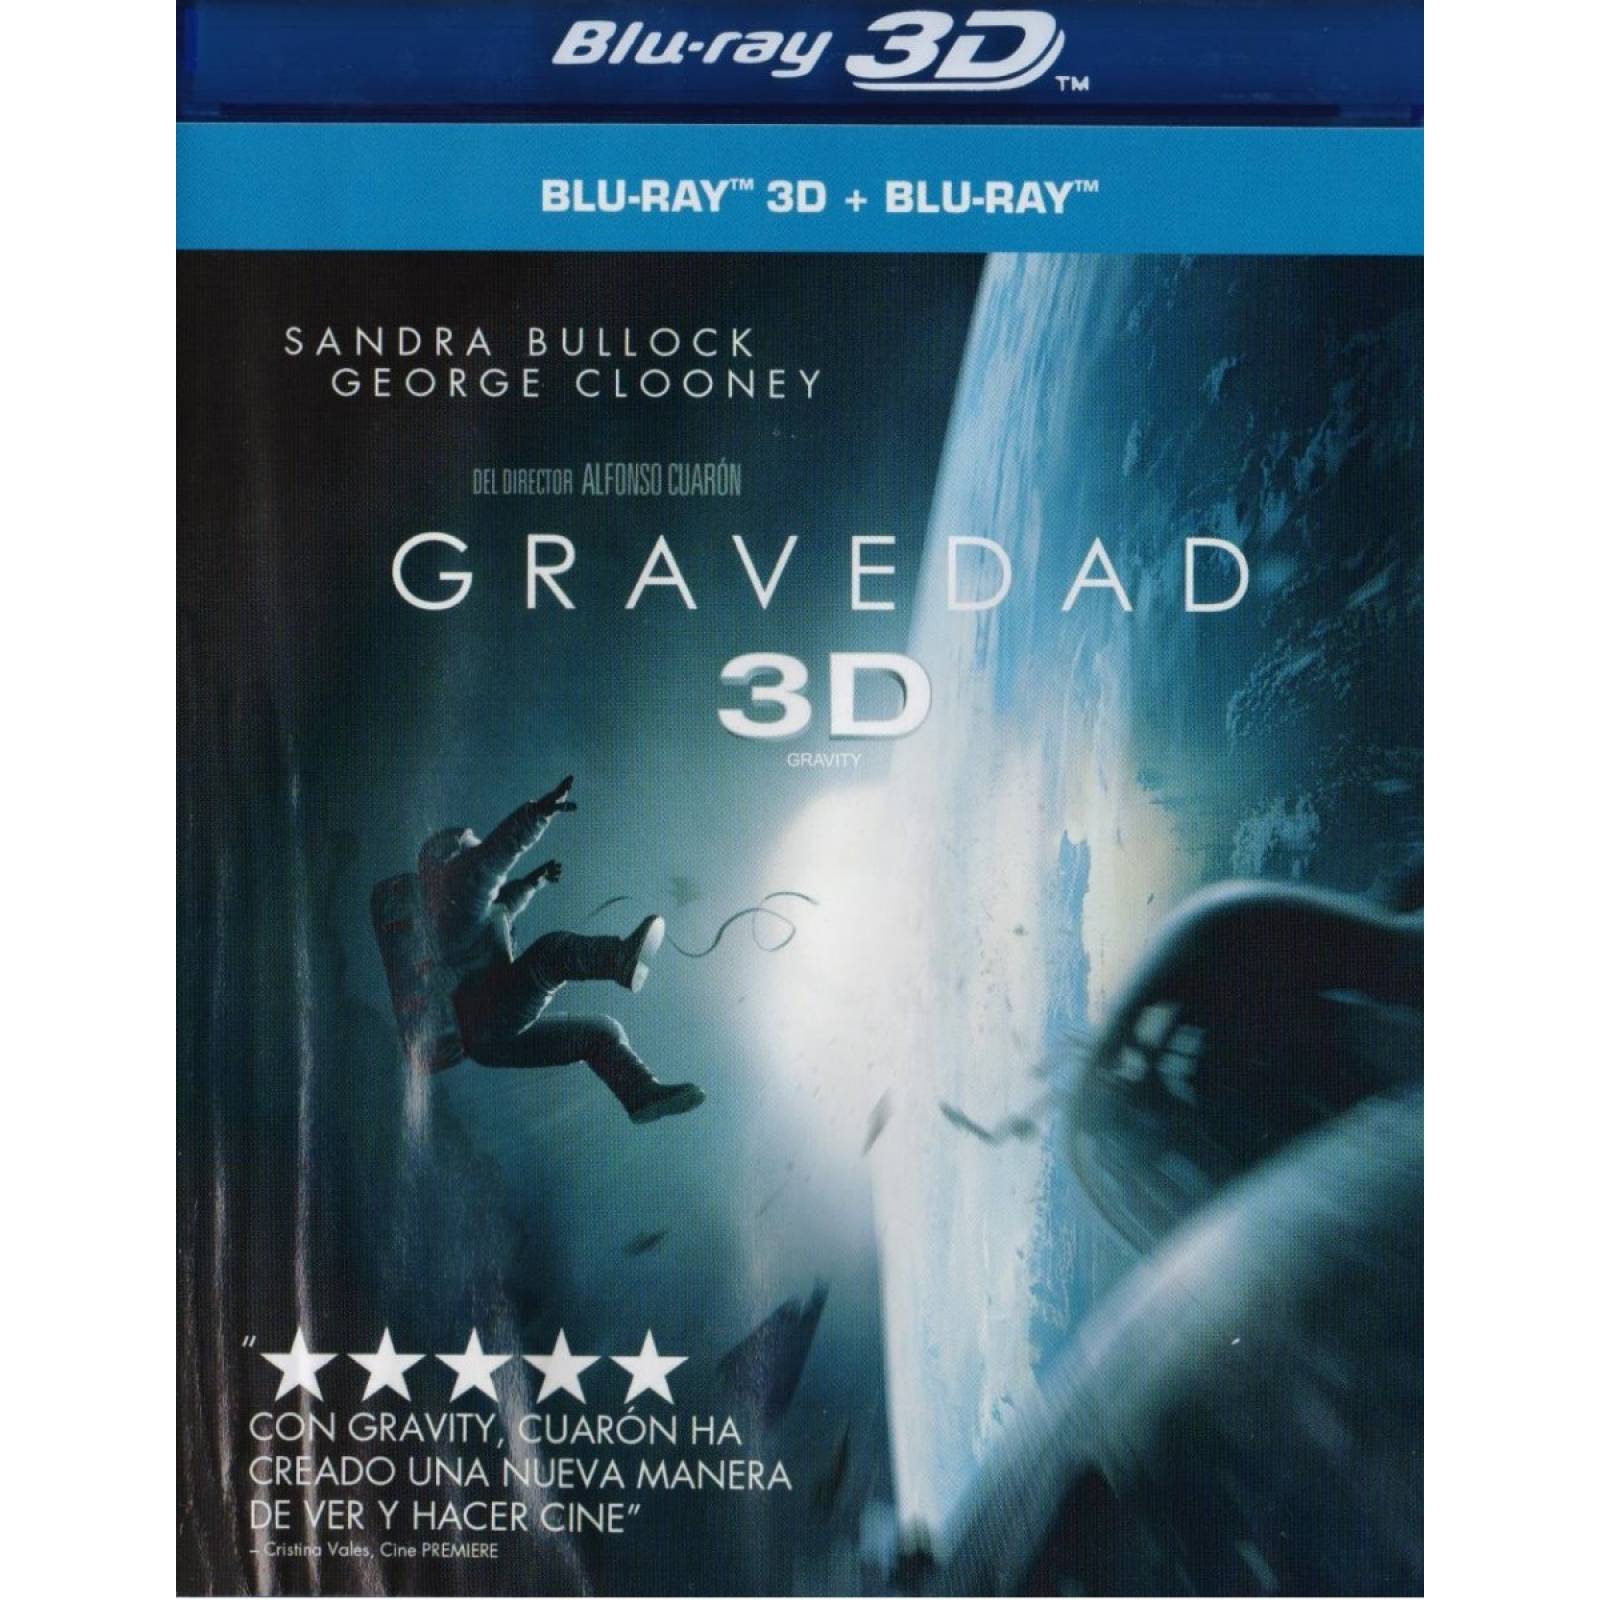 Gravedad 3d Alfonso Cuaron Pelicula Bluray 3d + Bluray